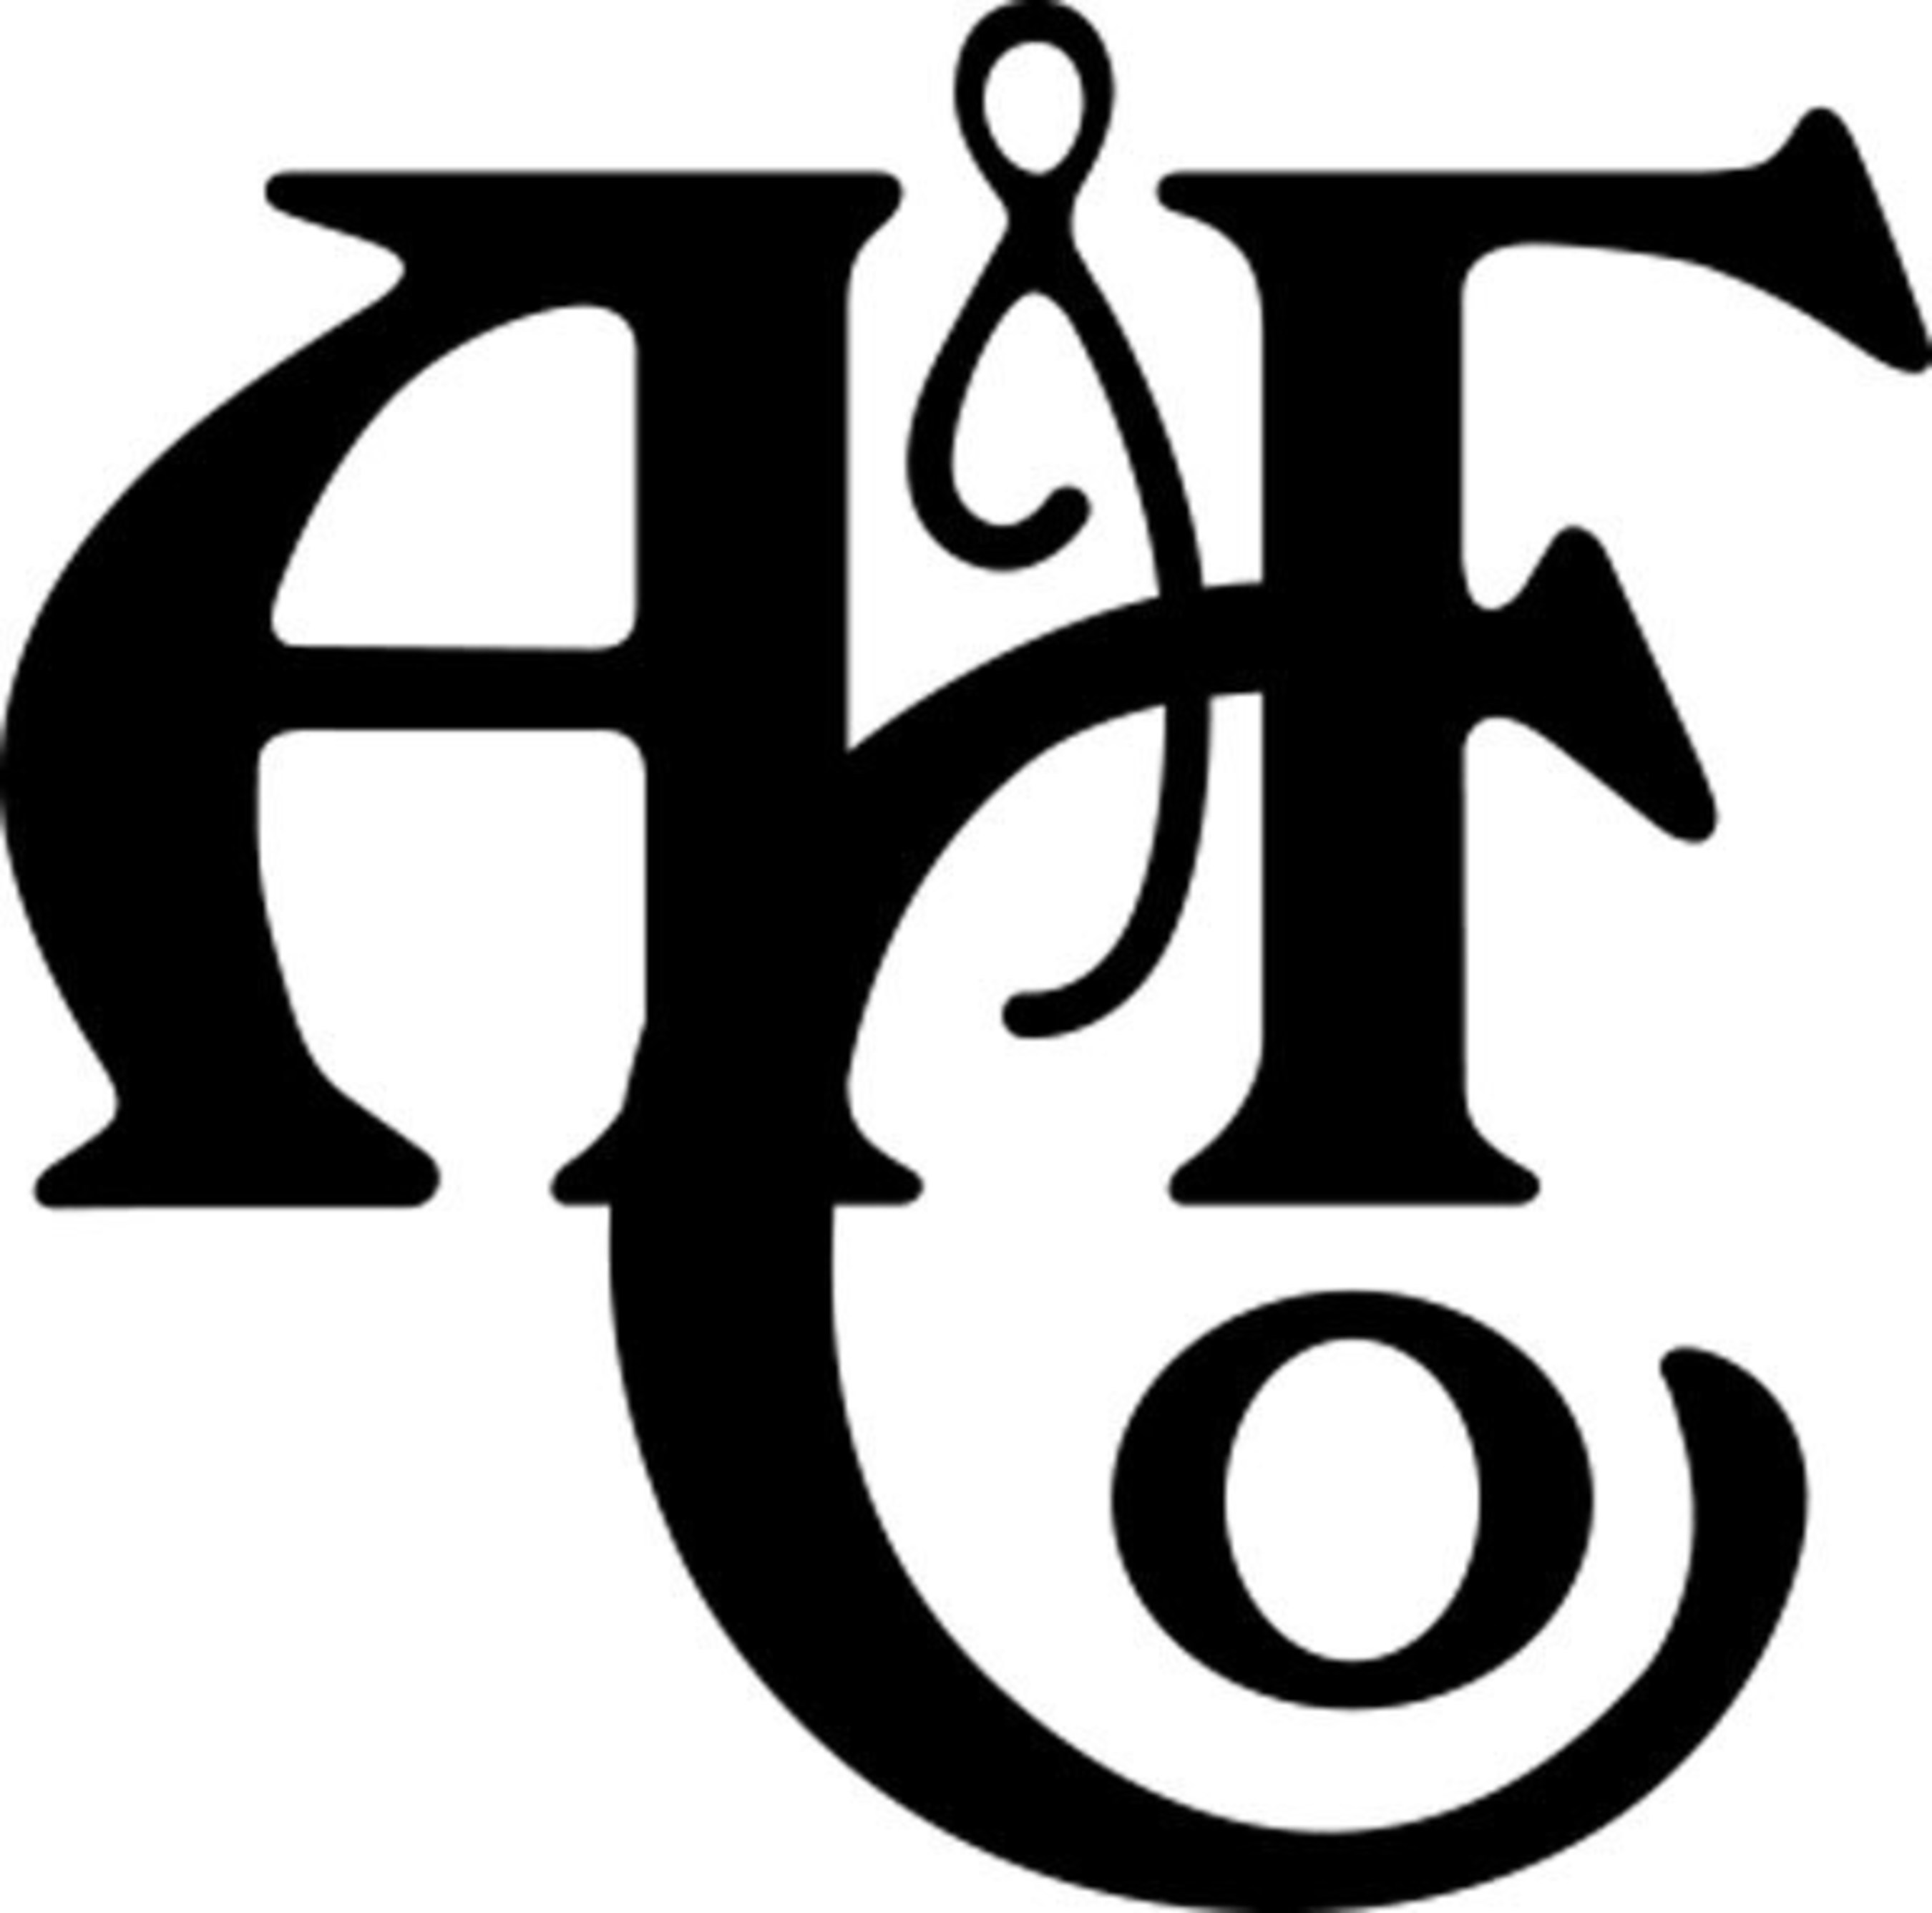 a&f brand image